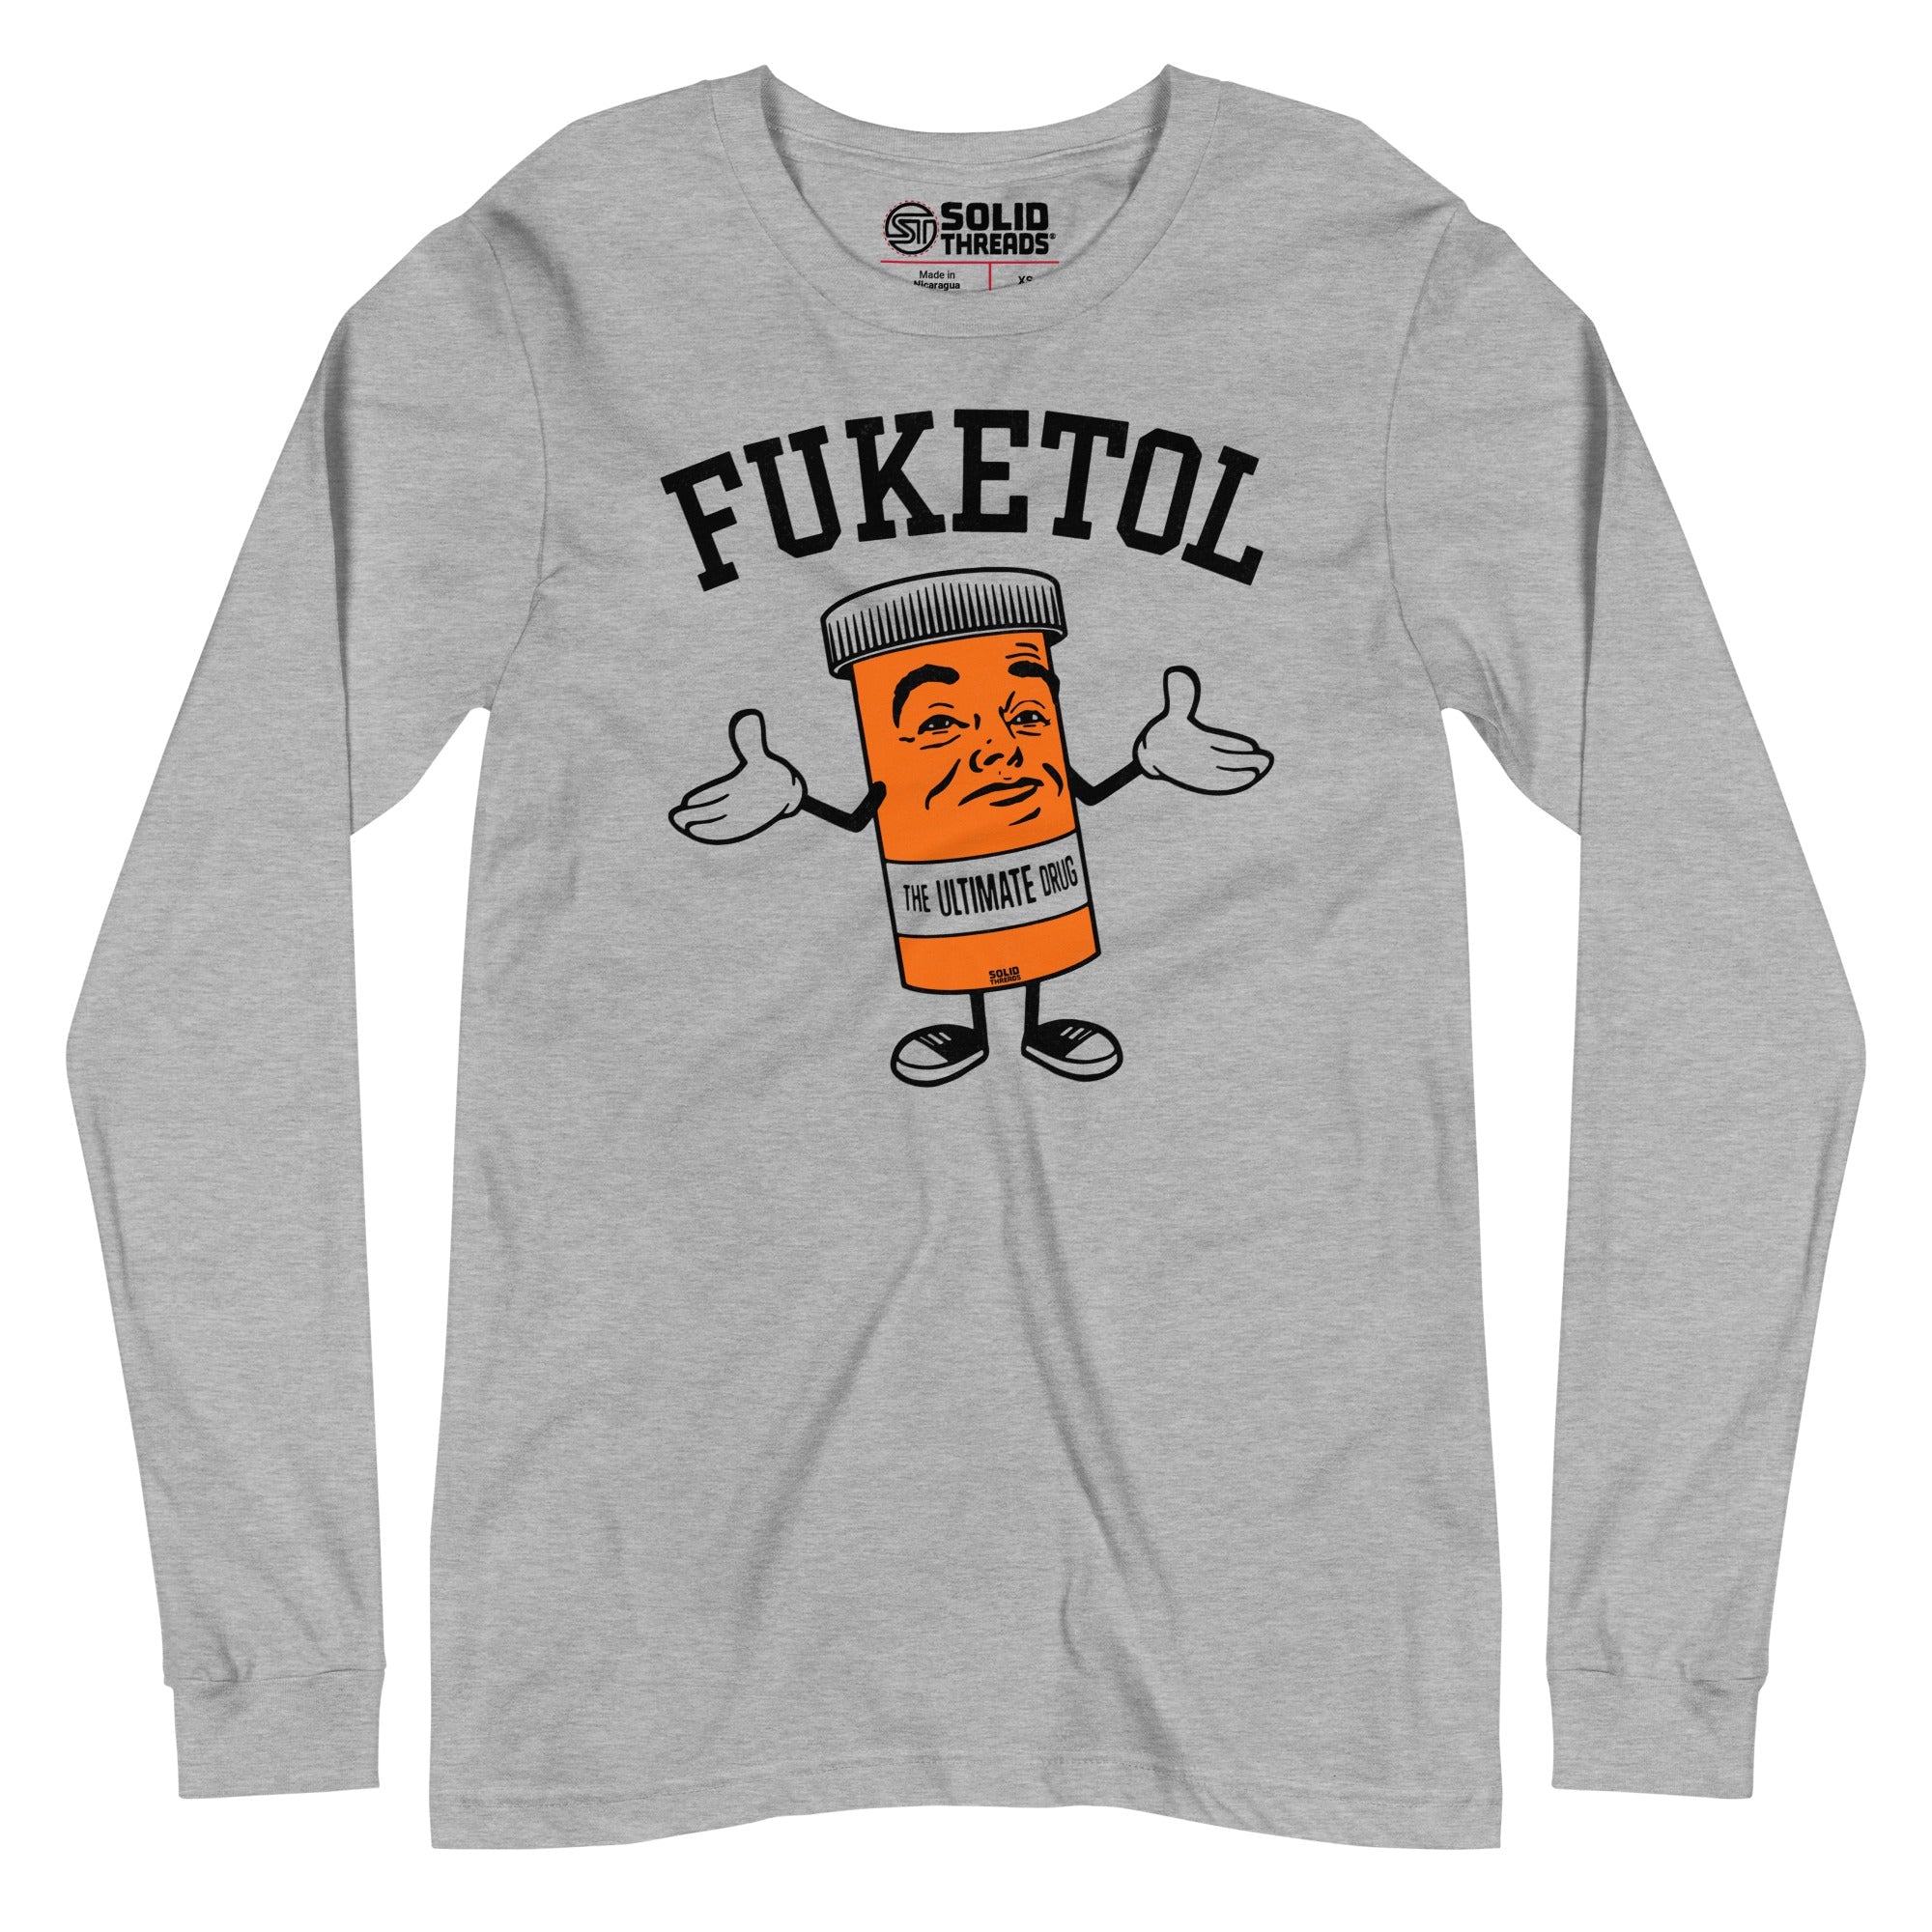 Men's Fuketol Retro Long Sleeve T Shirt | Funny Pill Bottle Graphic Tee | Solid Threads